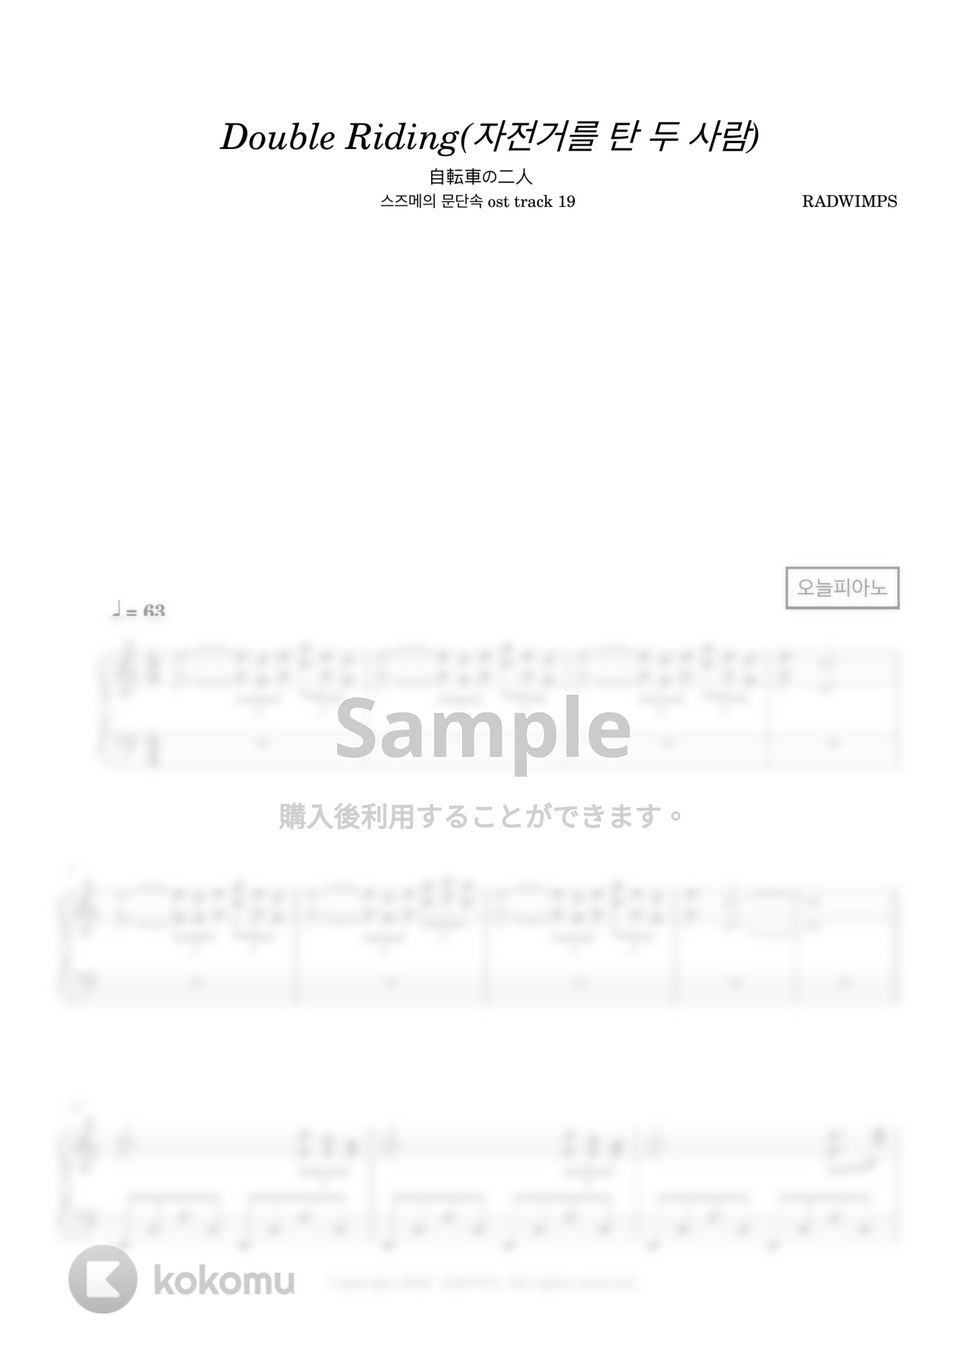 RADWIMPS - 自転車の二人 (Double Riding) (すずめの 戸締 とじ まり ost track 19) by 今日ピアノ(Oneul Piano)